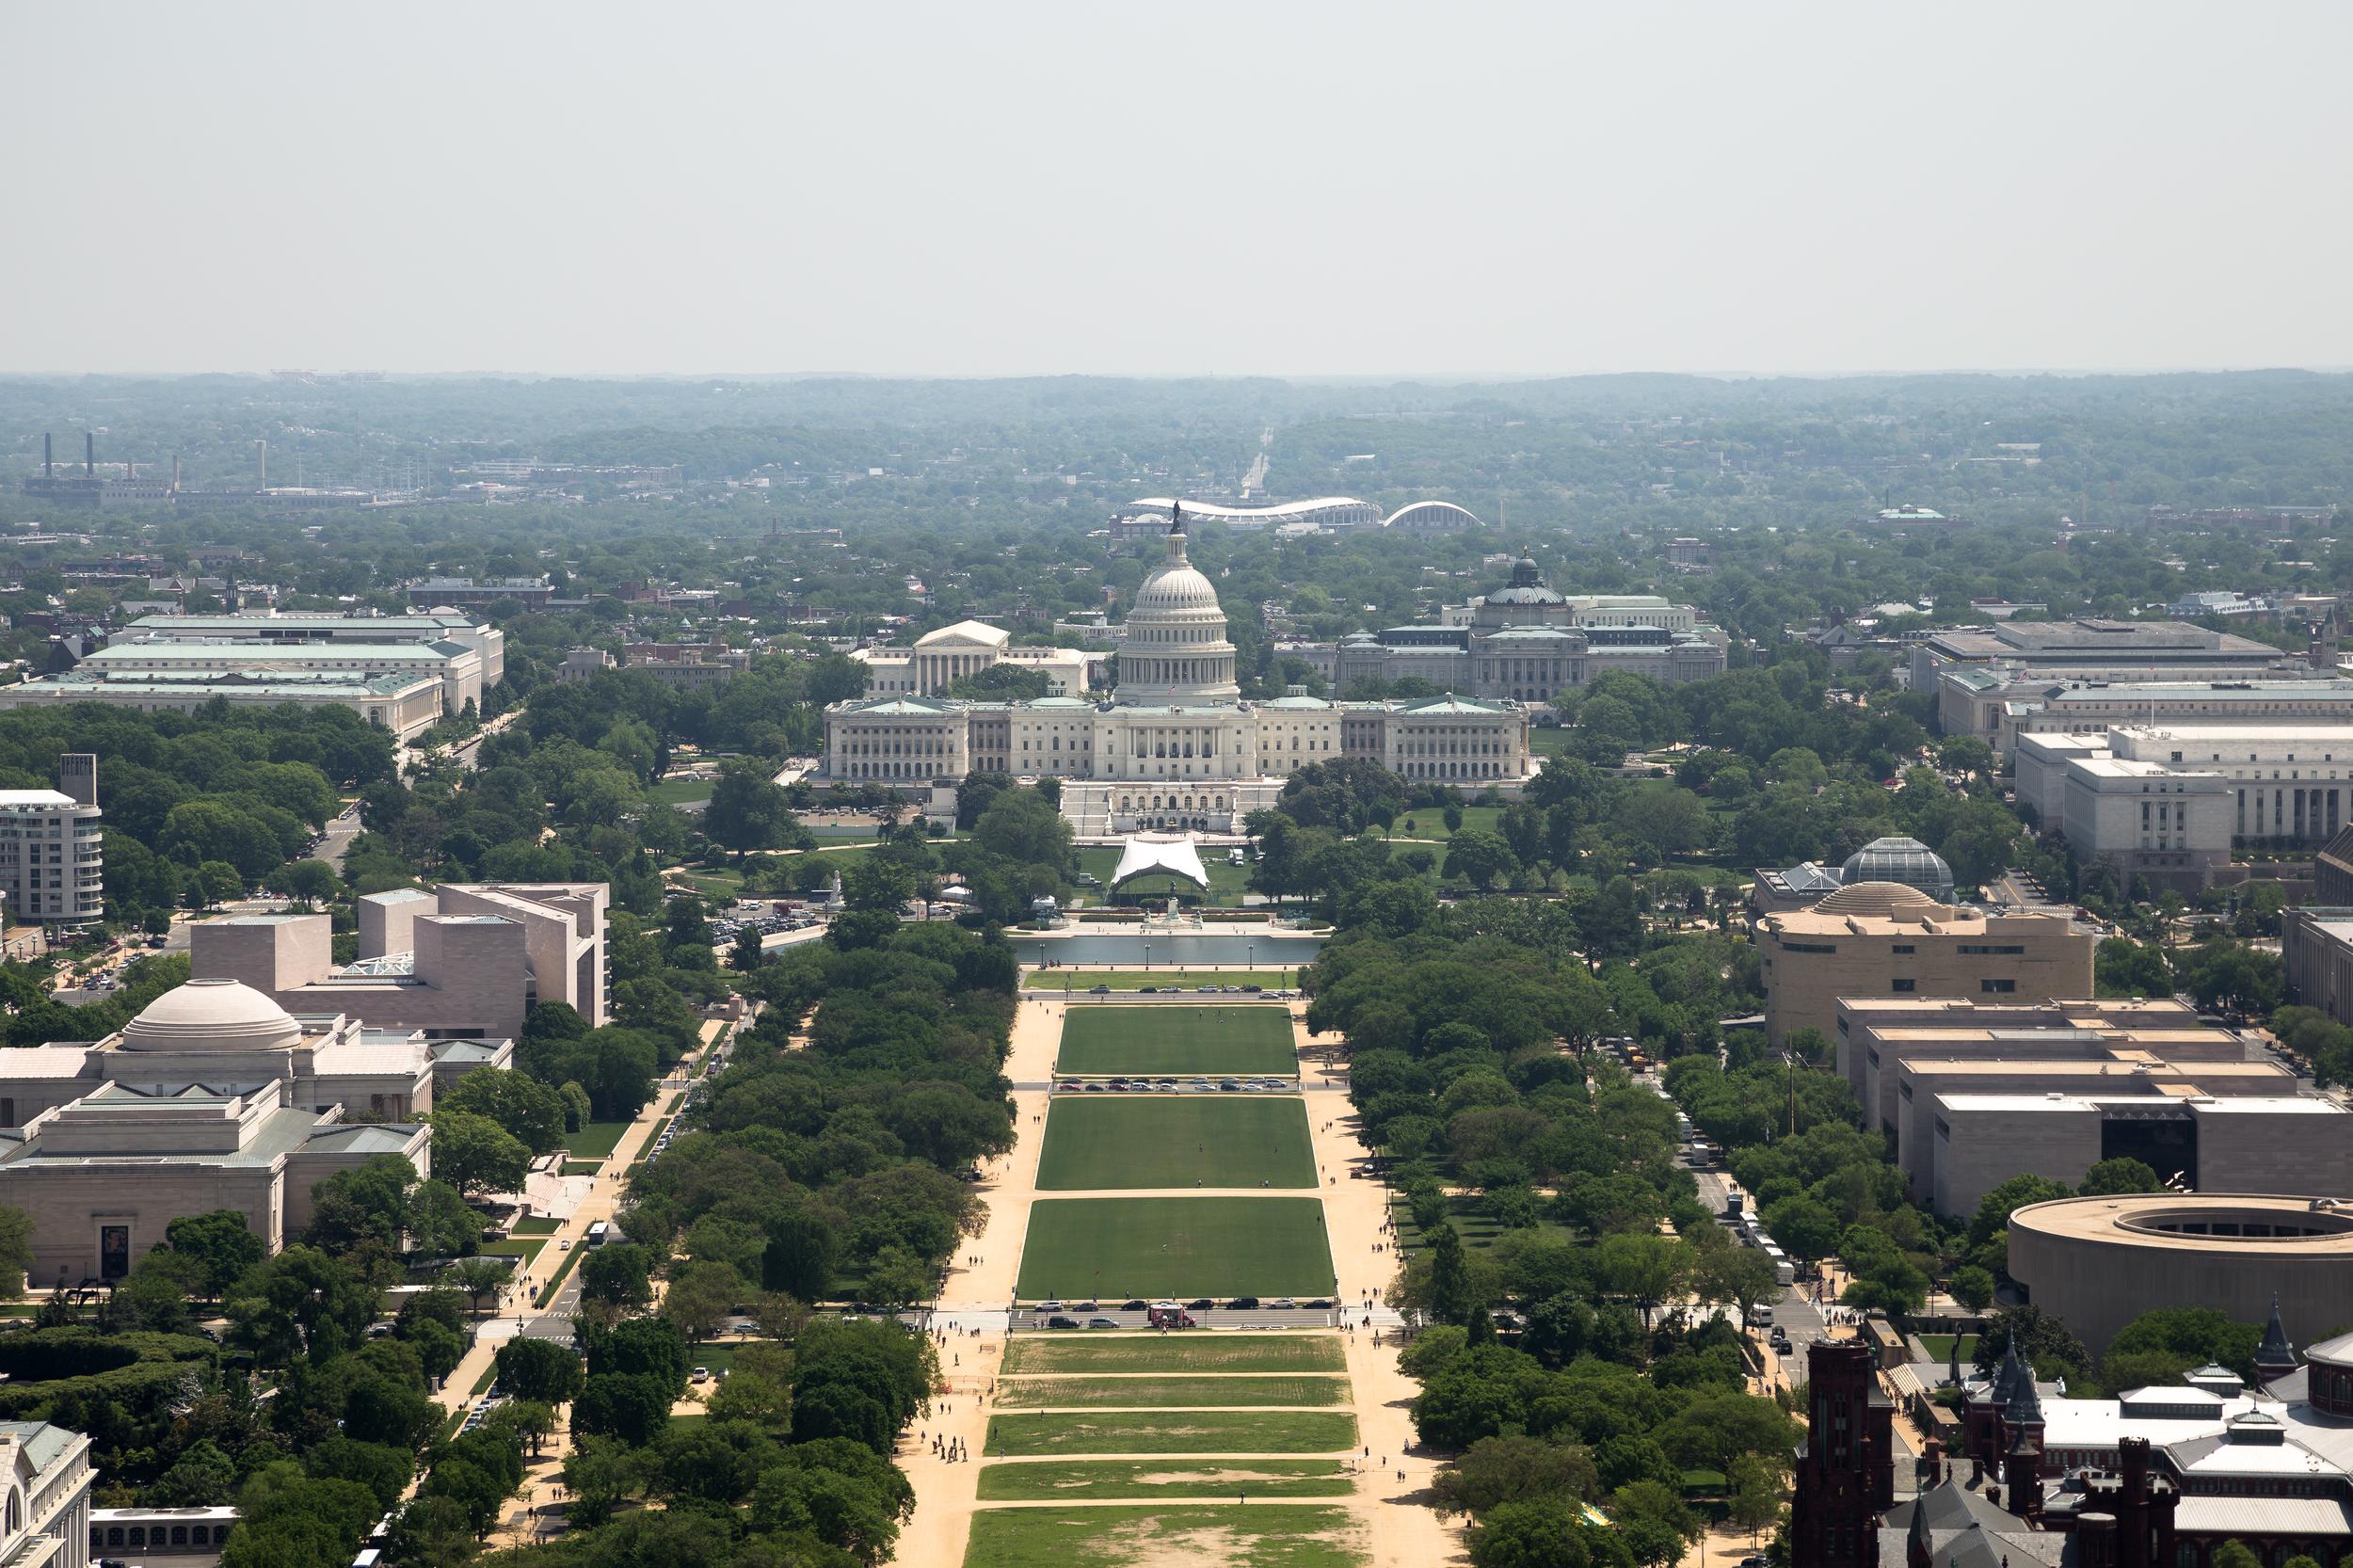 United States Capitol from the Washington Monument